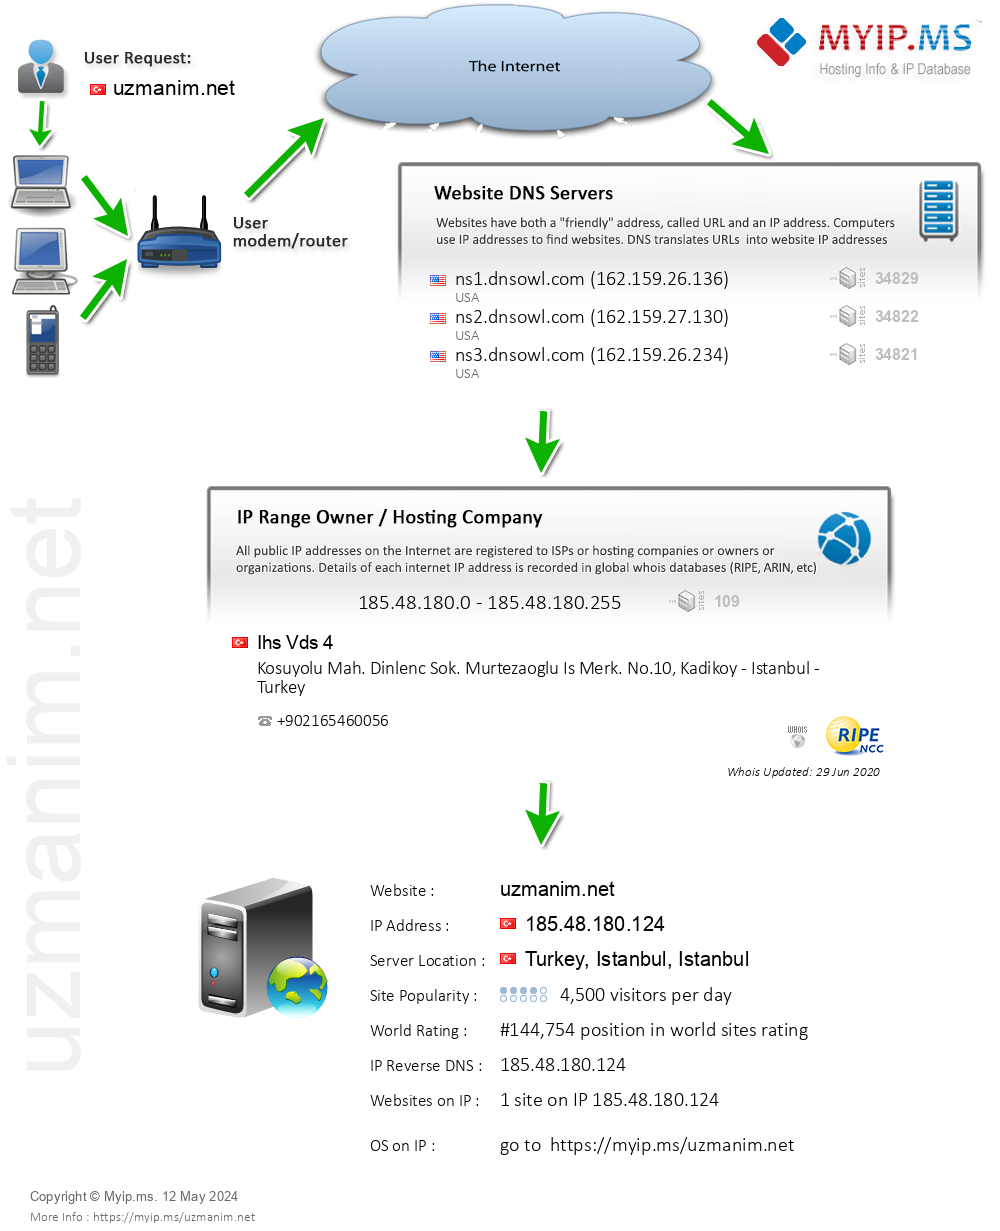 Uzmanim.net - Website Hosting Visual IP Diagram